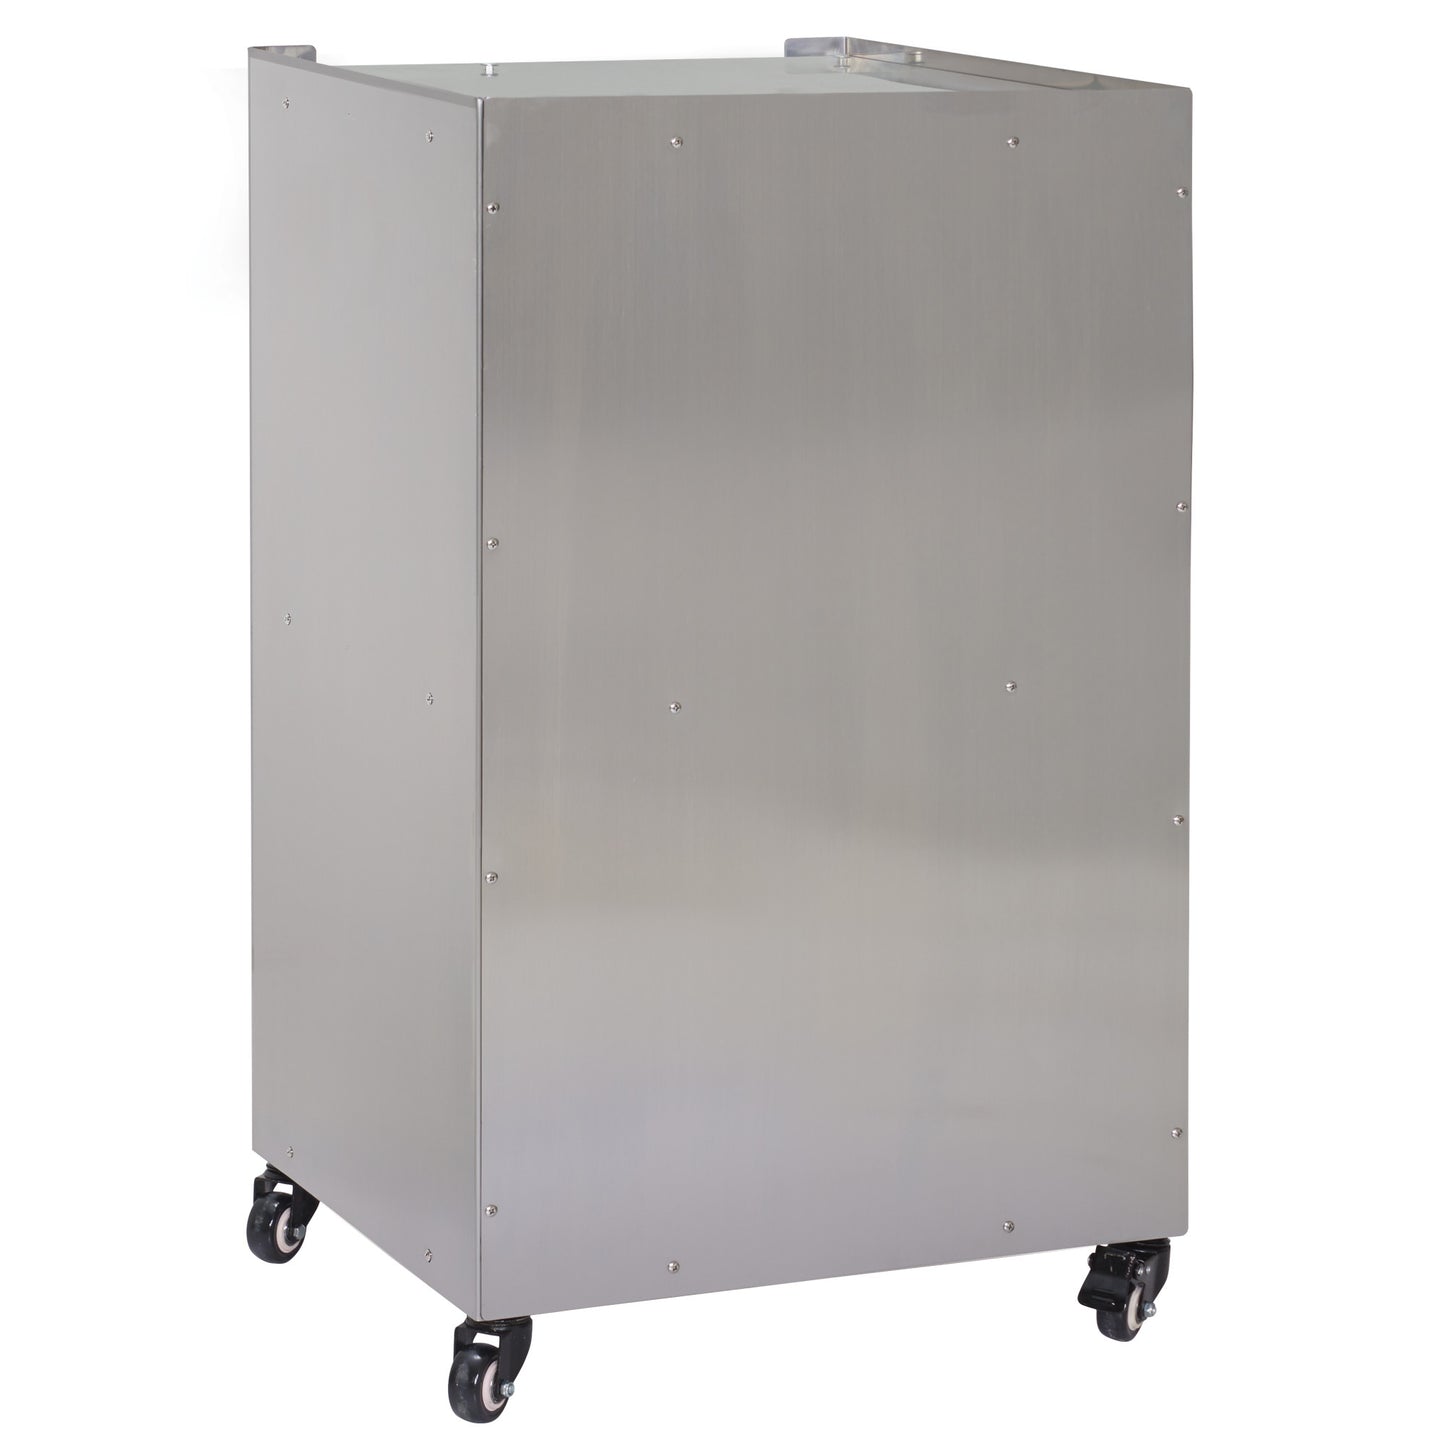 30087 - BenchmarkUSA "Silver Screen" Popcorn Machine Pedestal for 11087